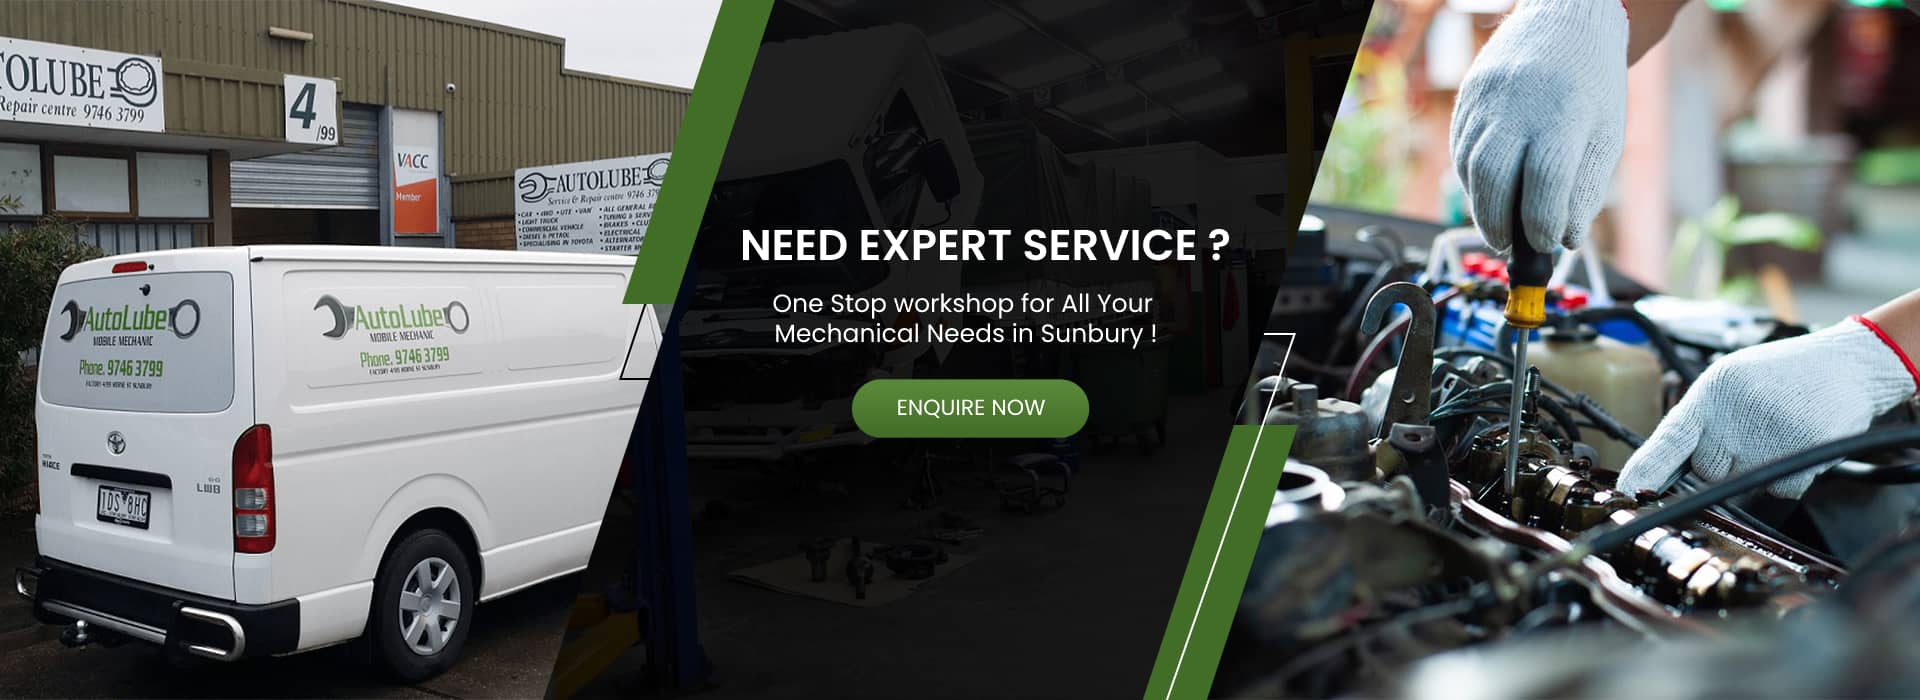 Need expert service?